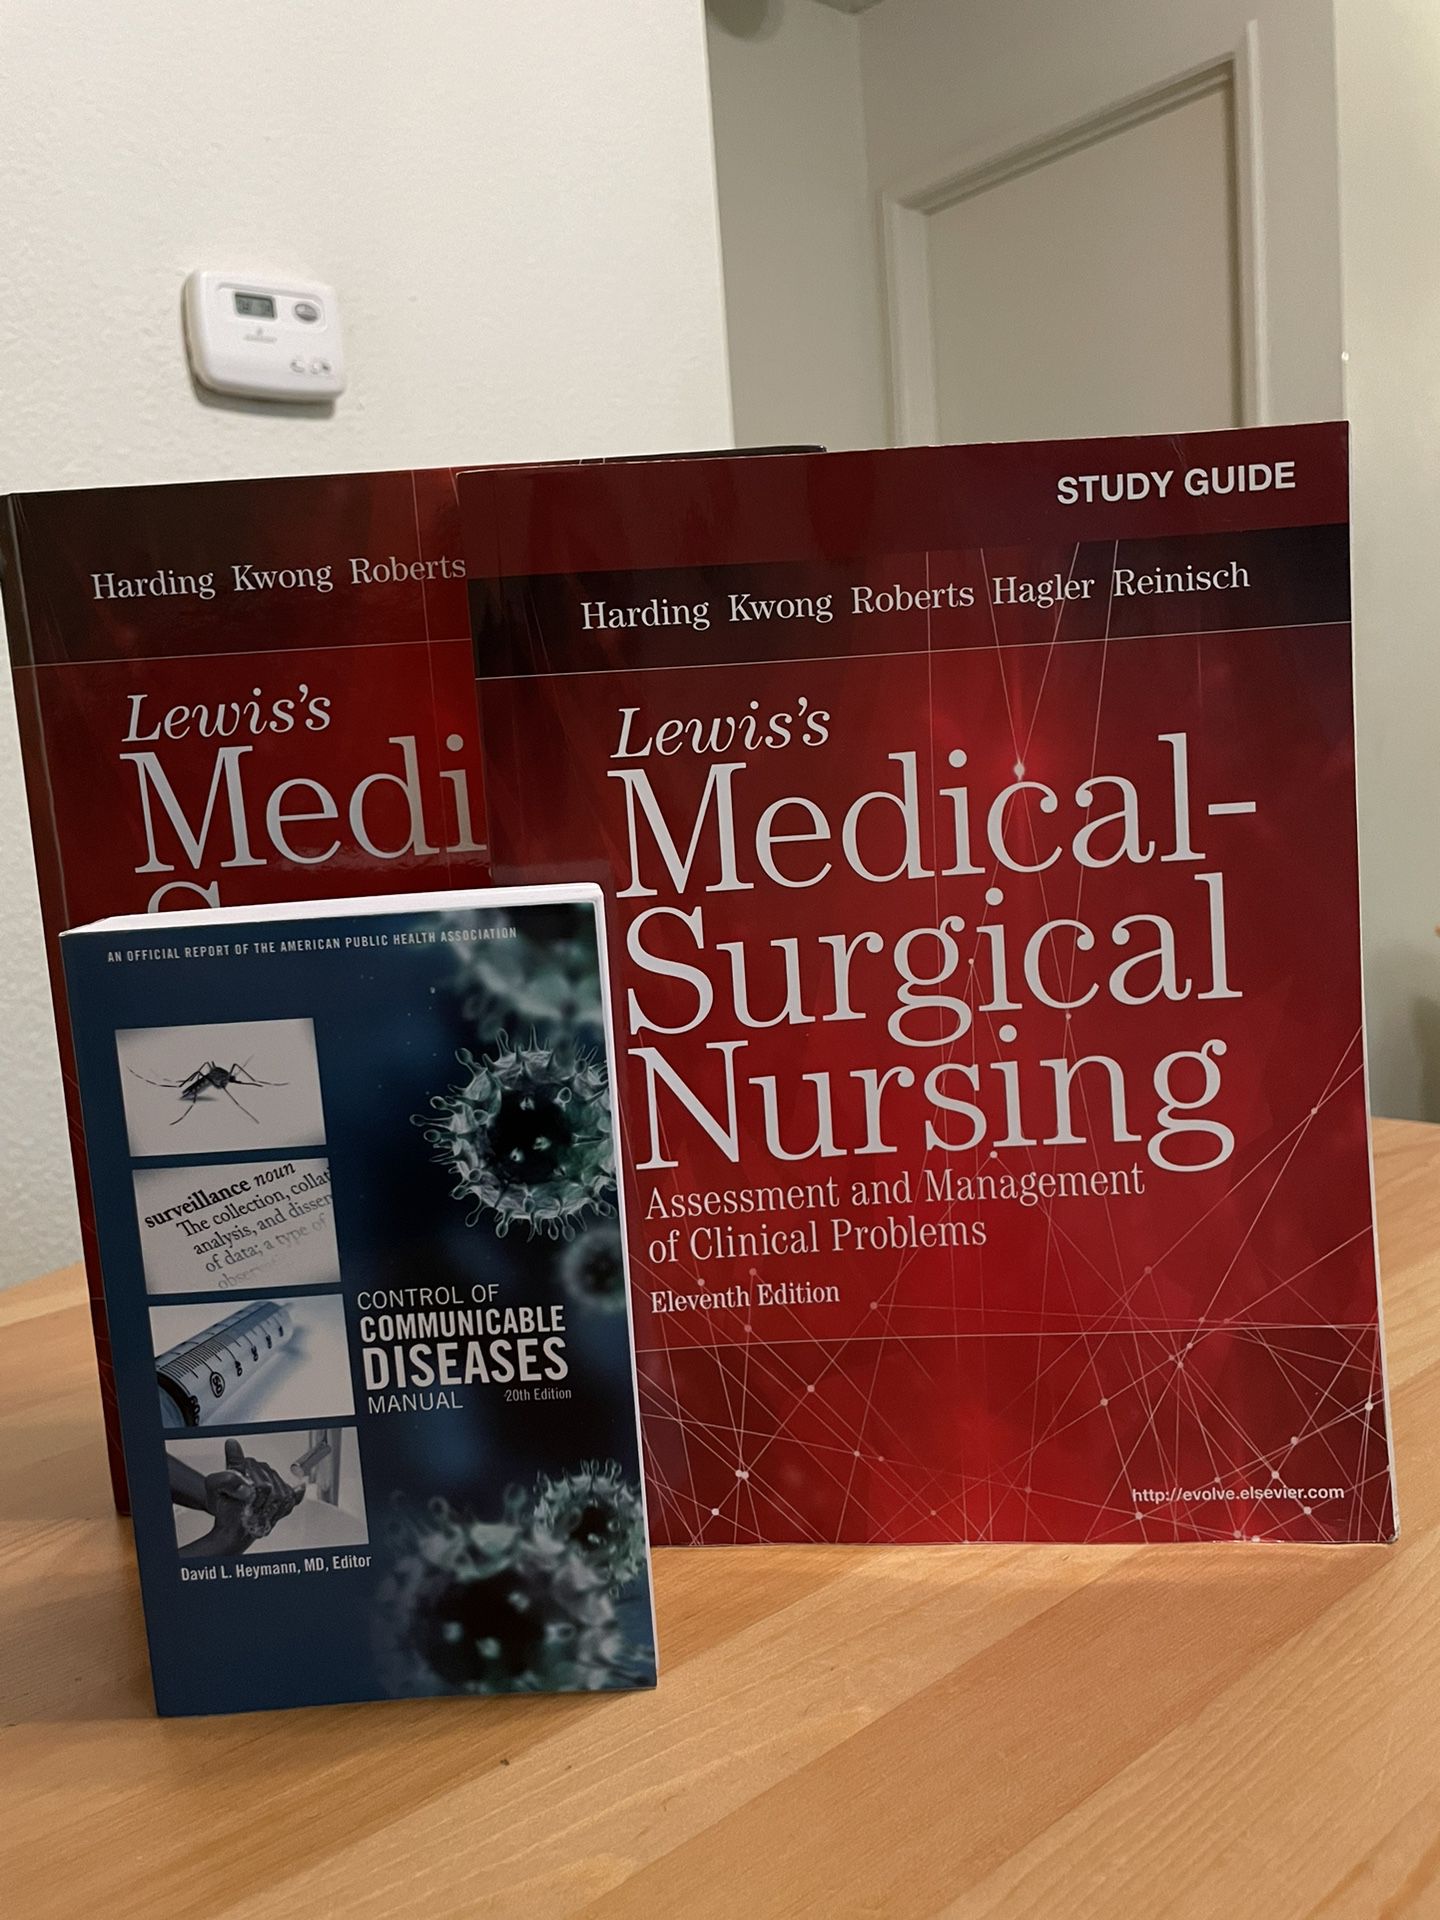 Medical Books. 